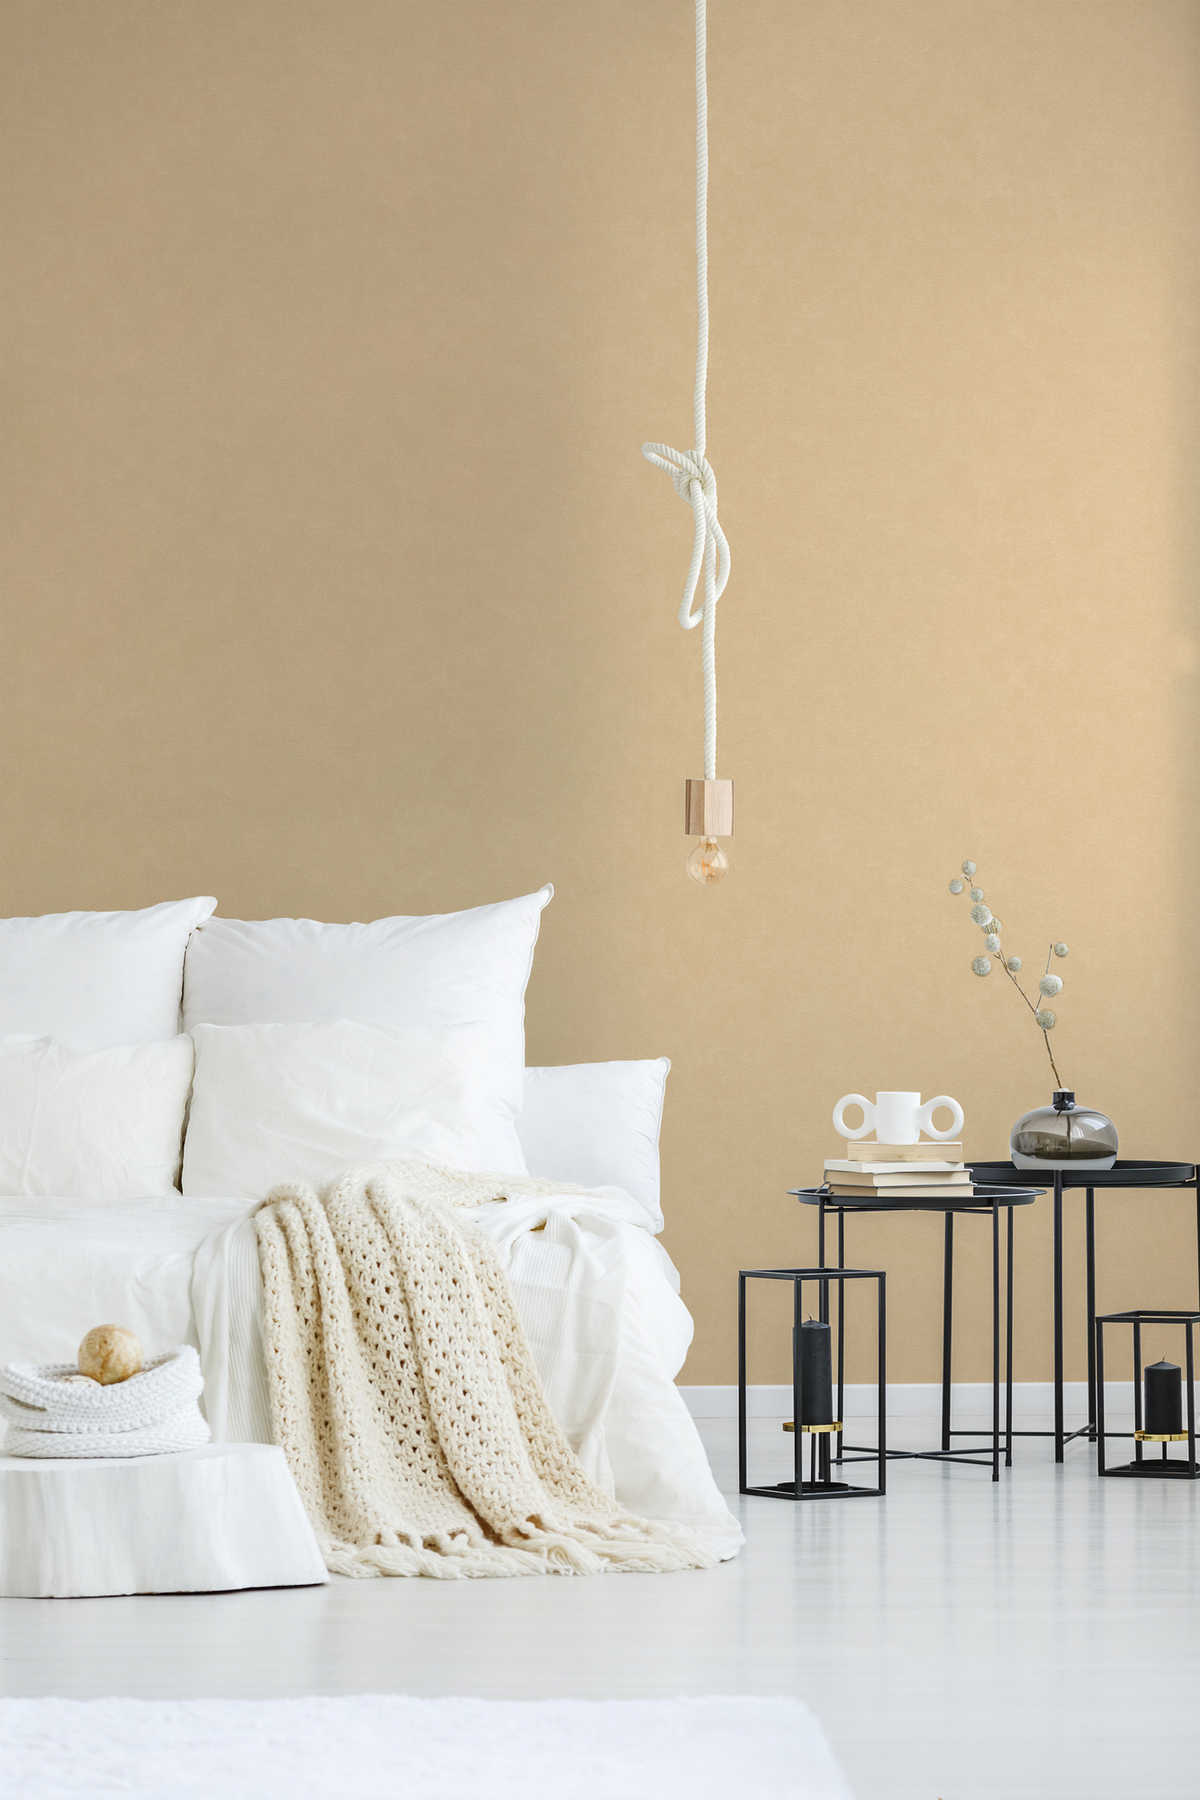             Radiant plain wallpaper pop art style - beige
        